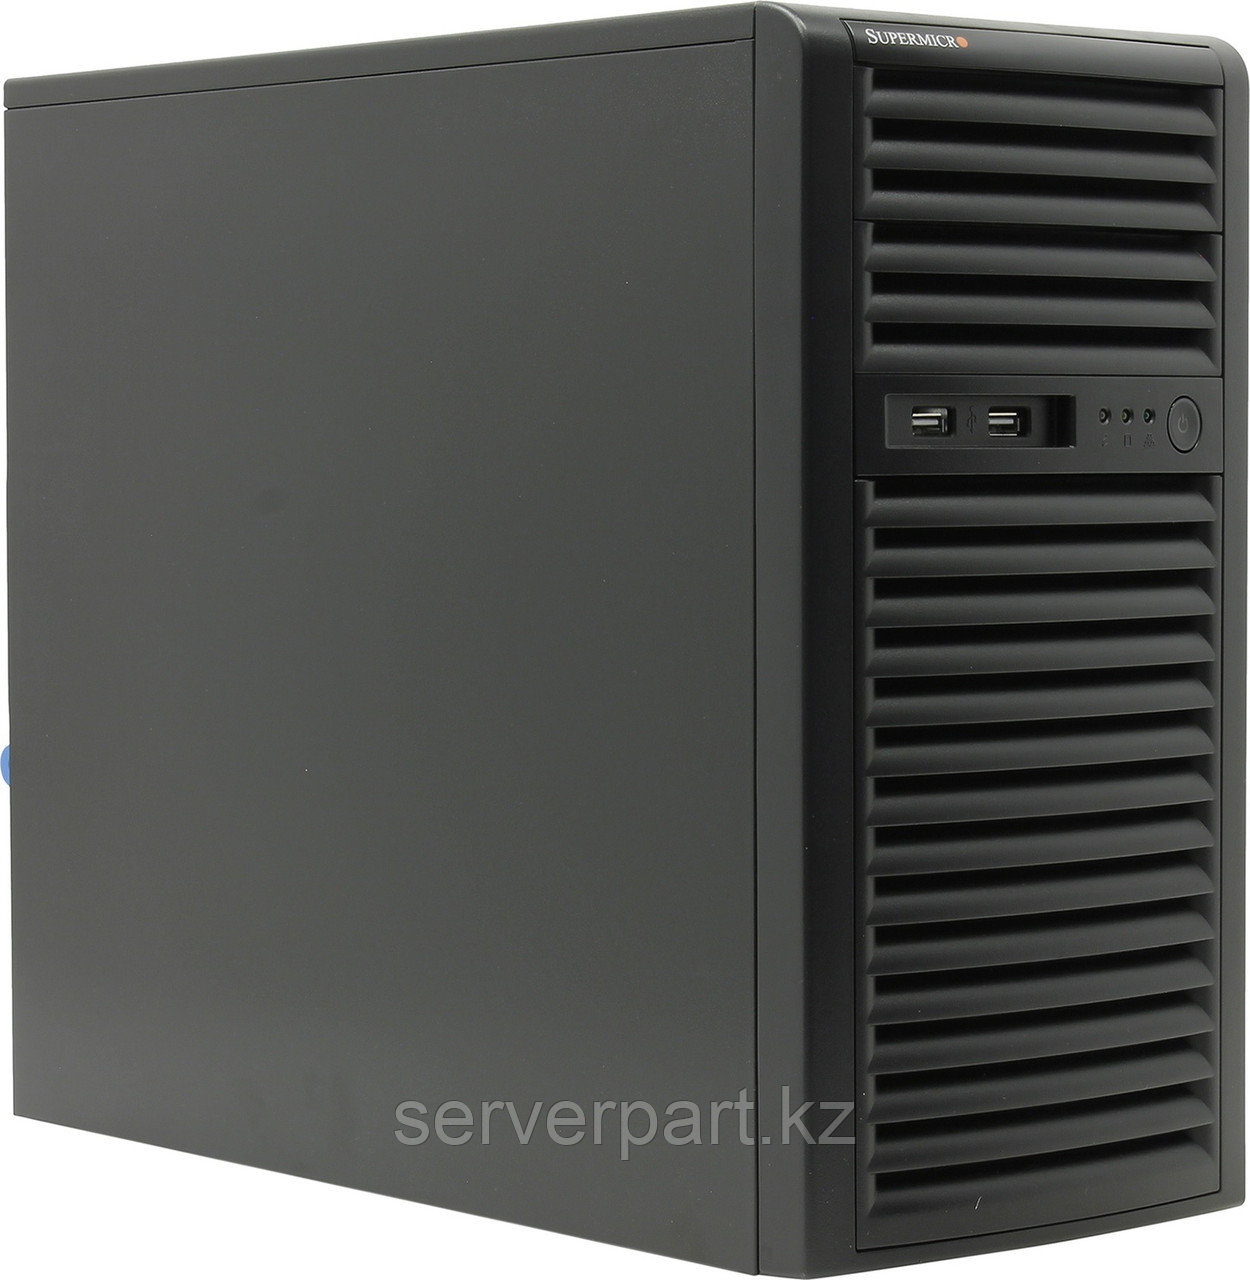 Сервер Supermicro SYS-5039D Tower/4-core intel xeon E3-1220v6 3GHz/no RAM/no HDD up-to 4 nhp/RAID, фото 1